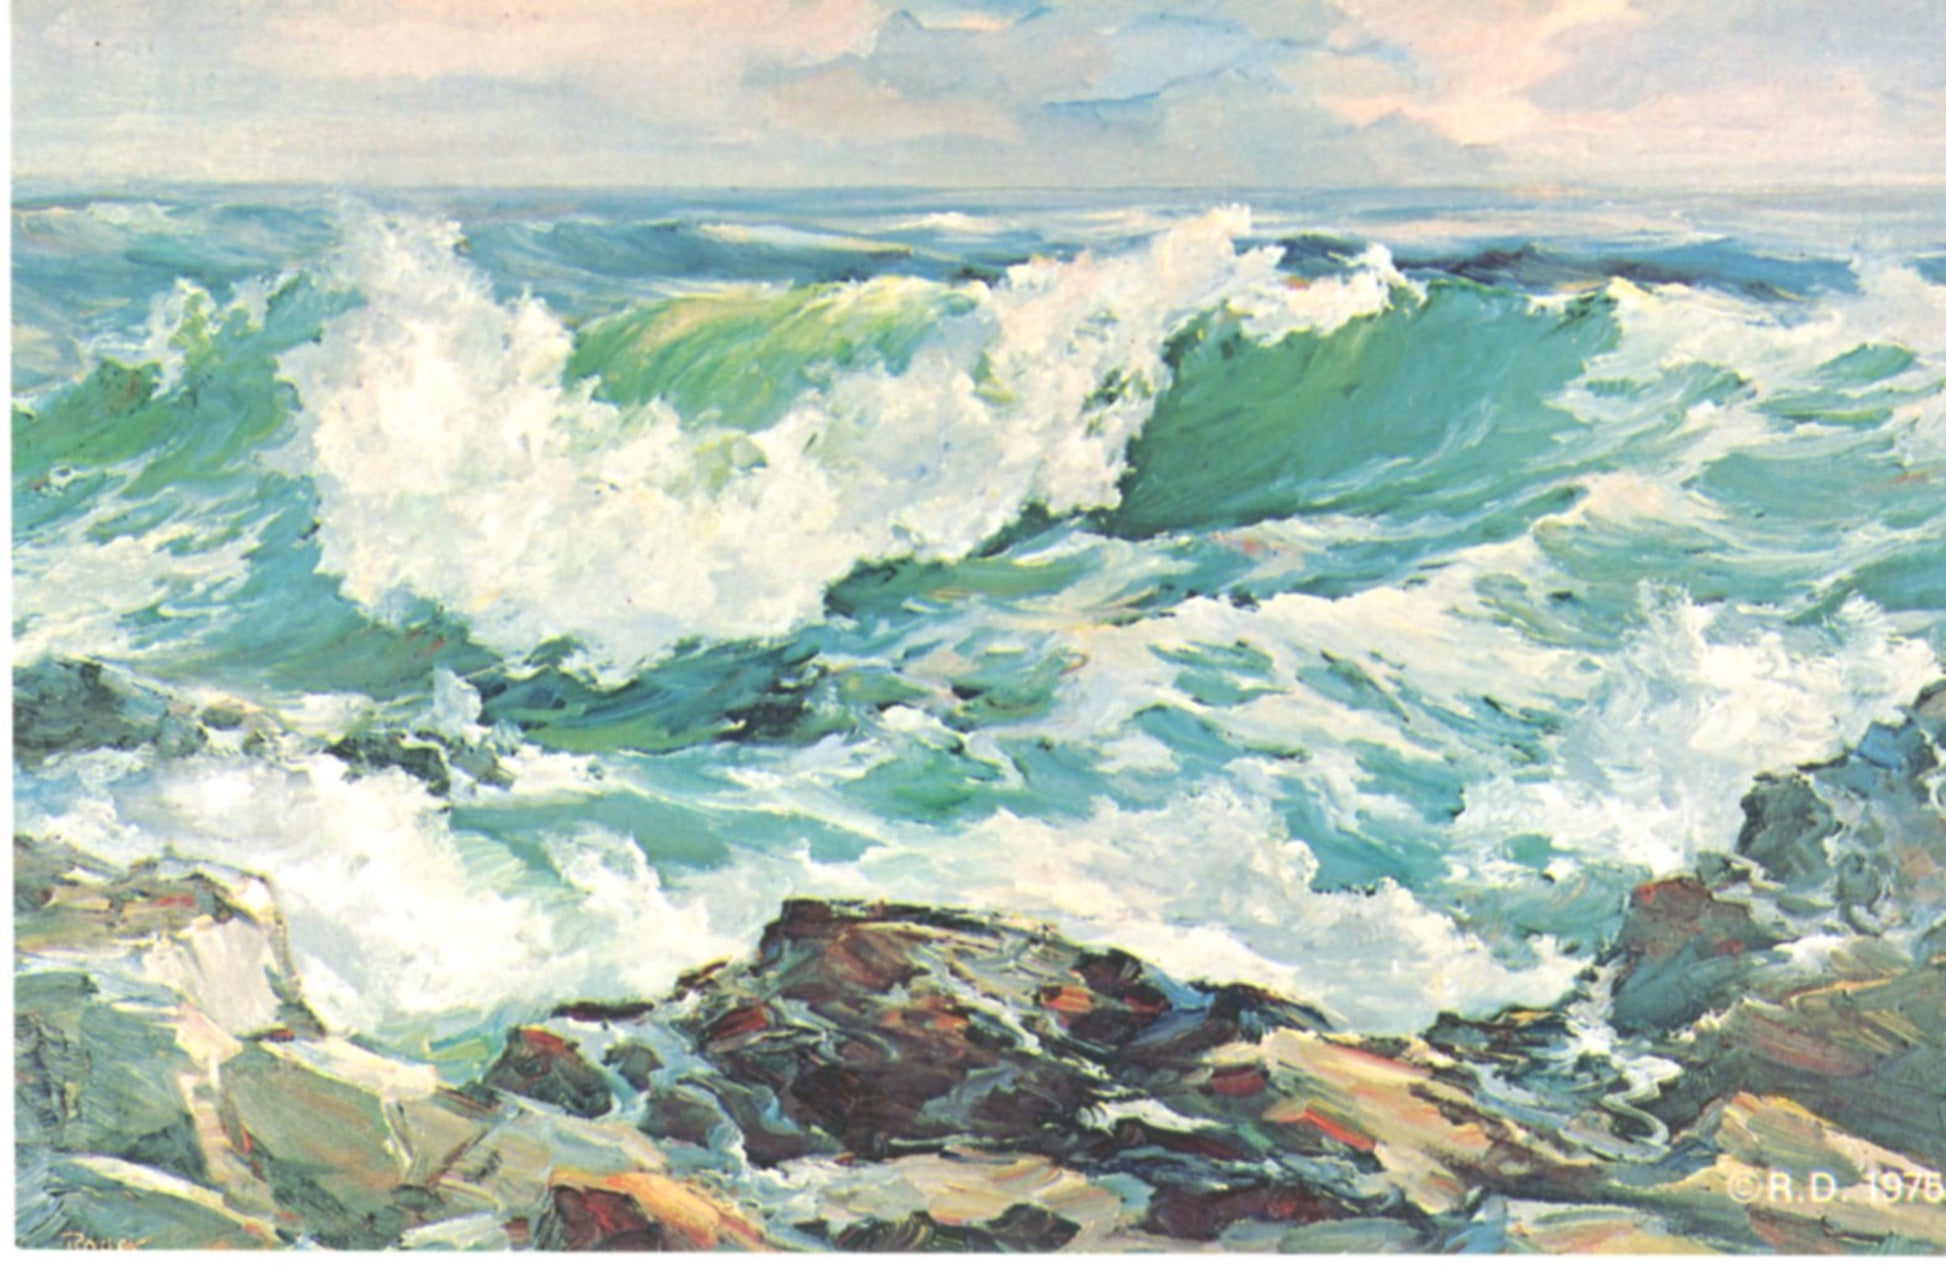 "Rhythmic Turbulence" Reproduction of Original Oil Painting by Roger Deering Vintage Postcard ©1970's